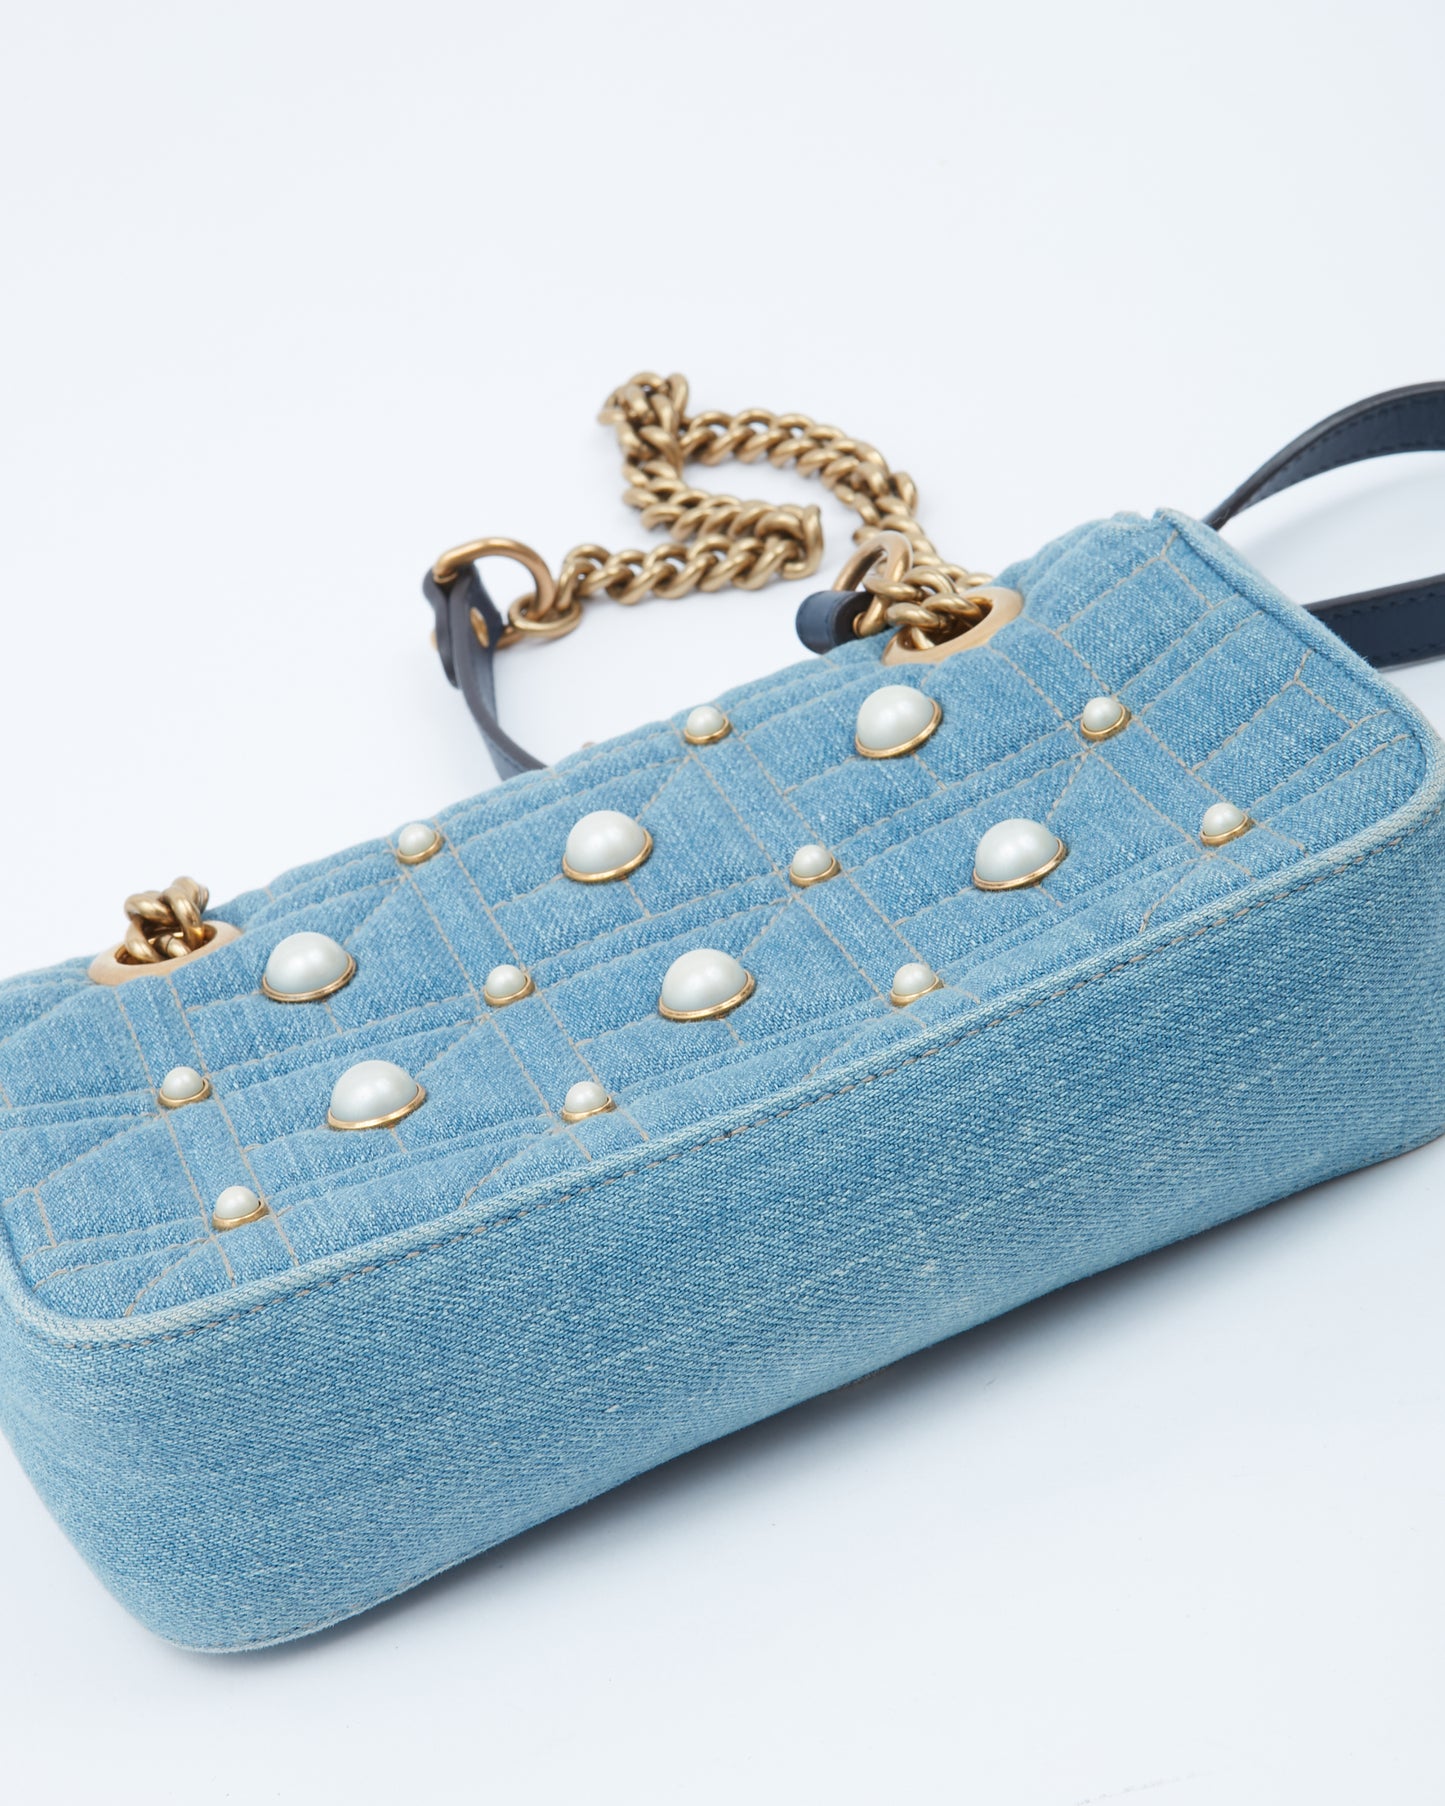 Gucci Blue Denim Matelasse Marmont GG Small Chain Bag